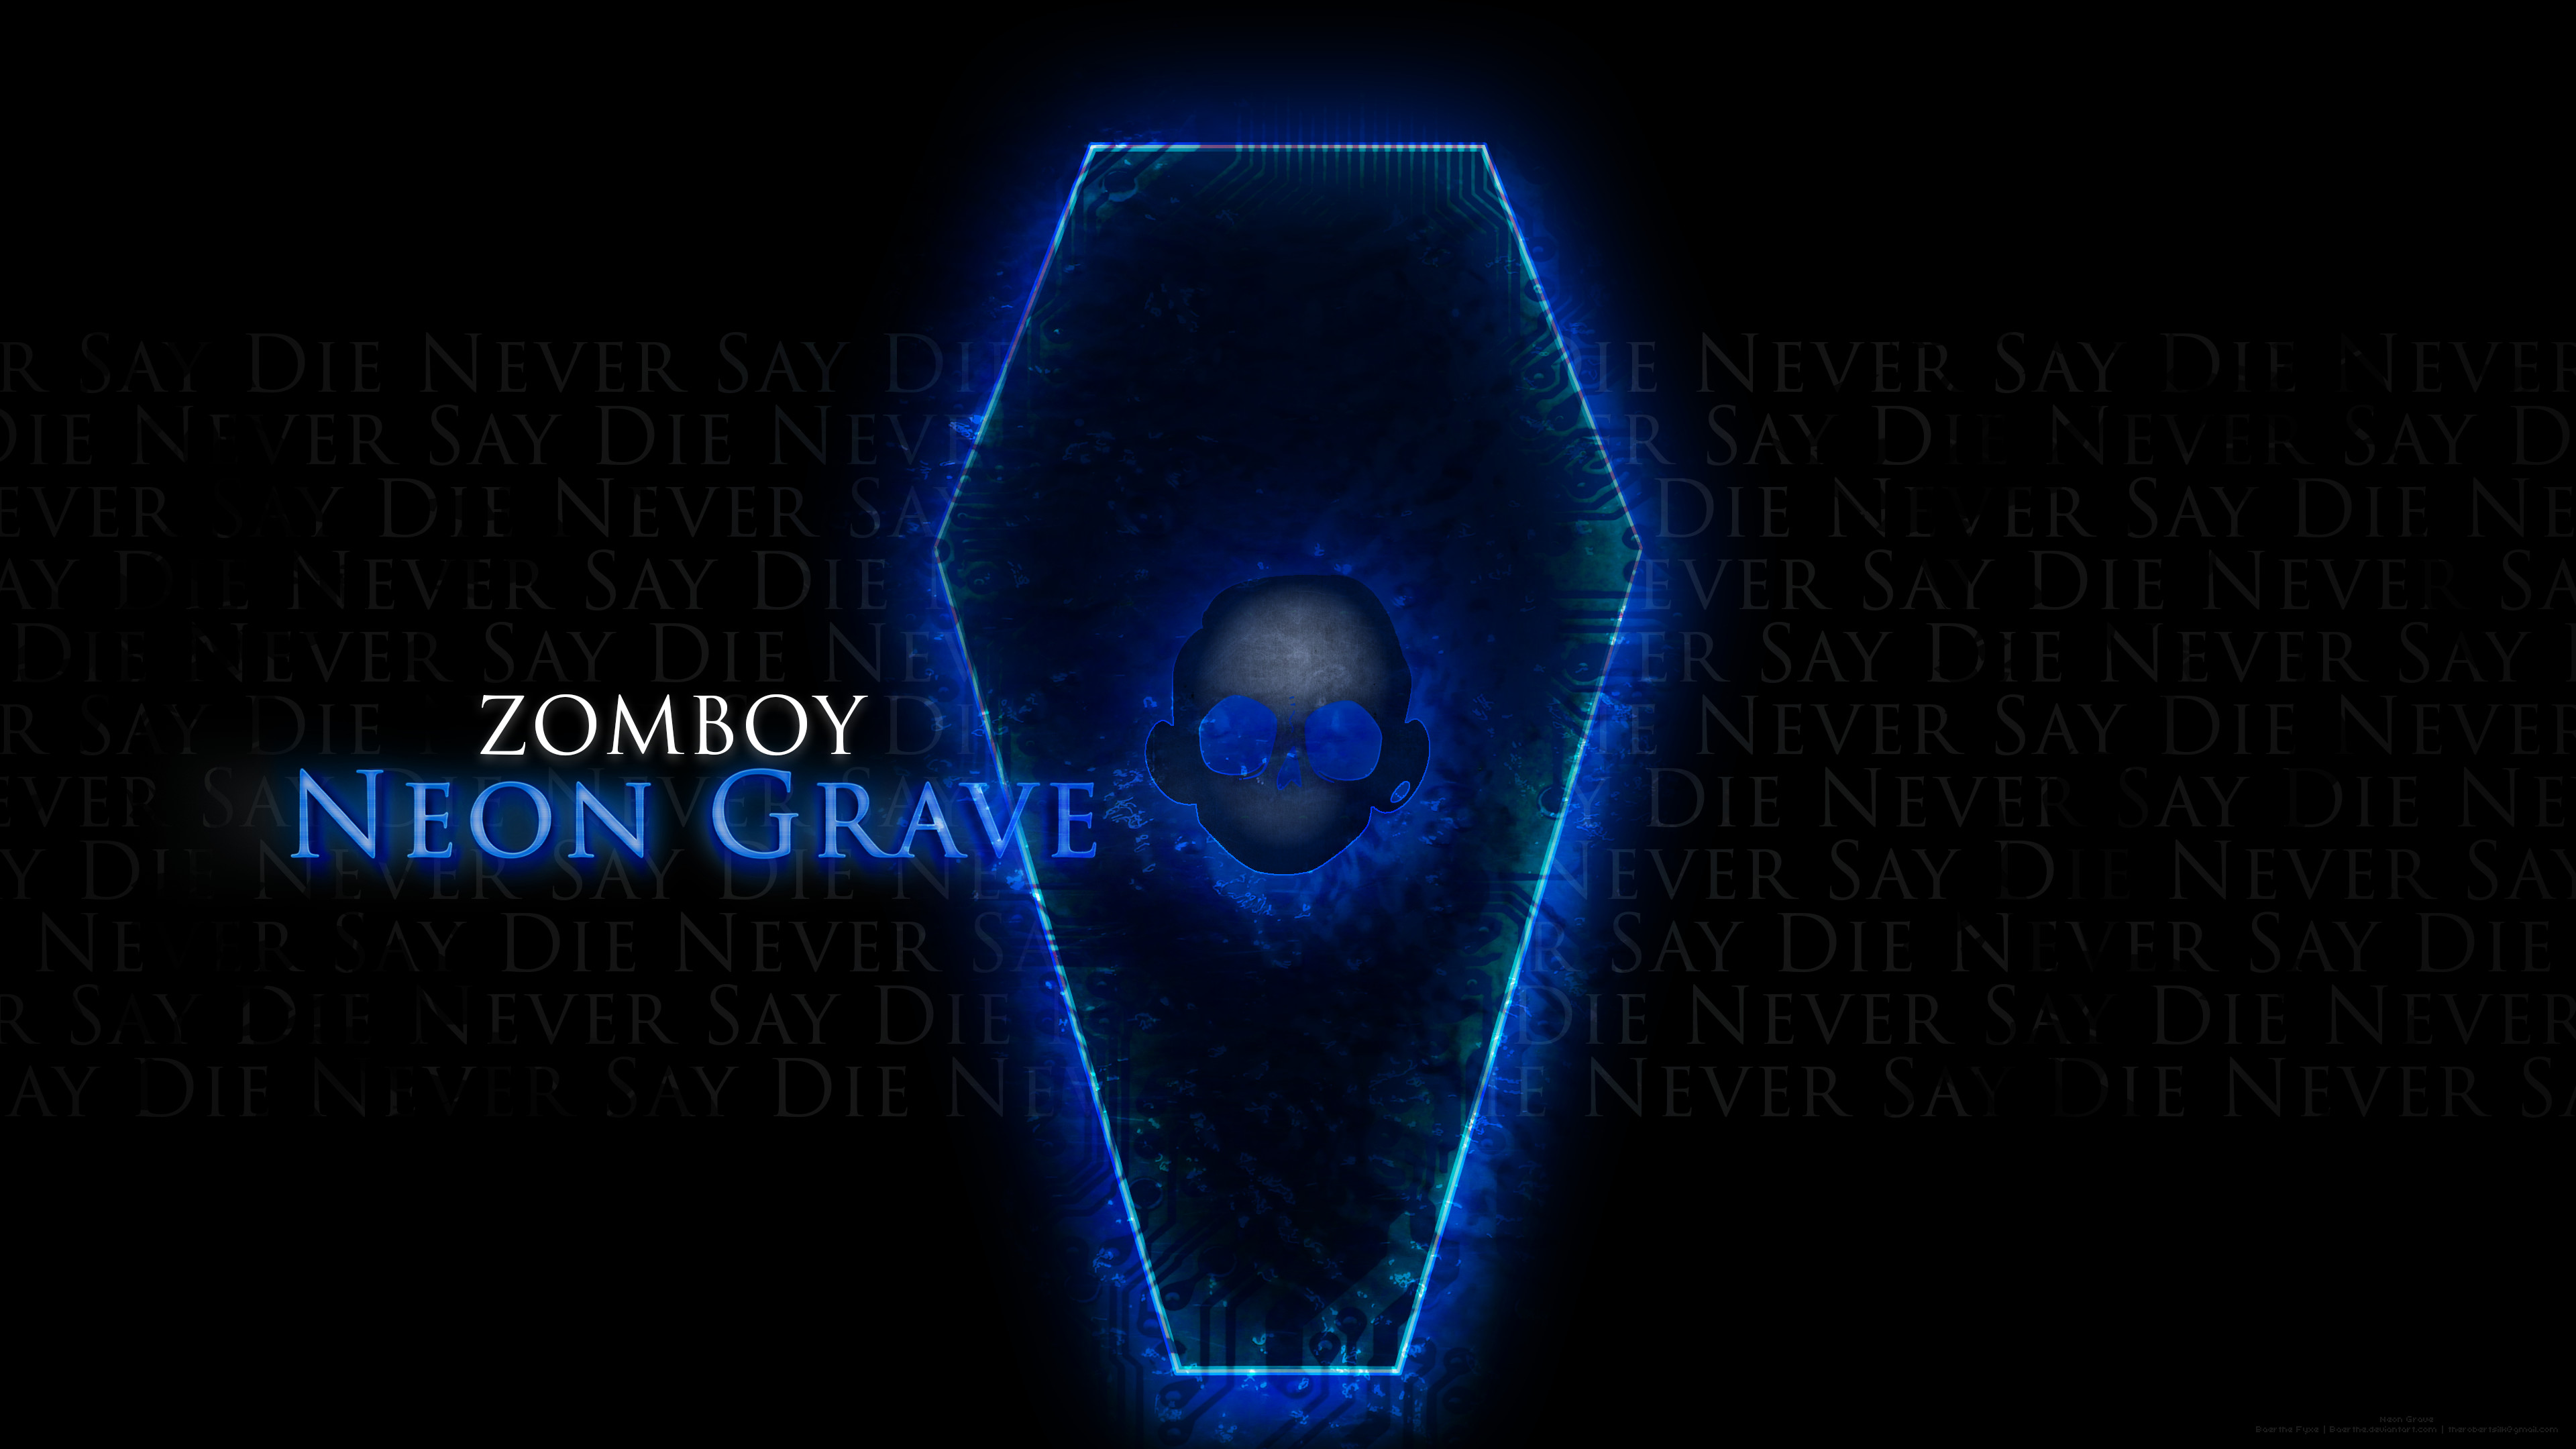 Neon gravestones. Zomboy Neon Grave. Zomboy Neon Grave Remixed. Zomboy Invaders.